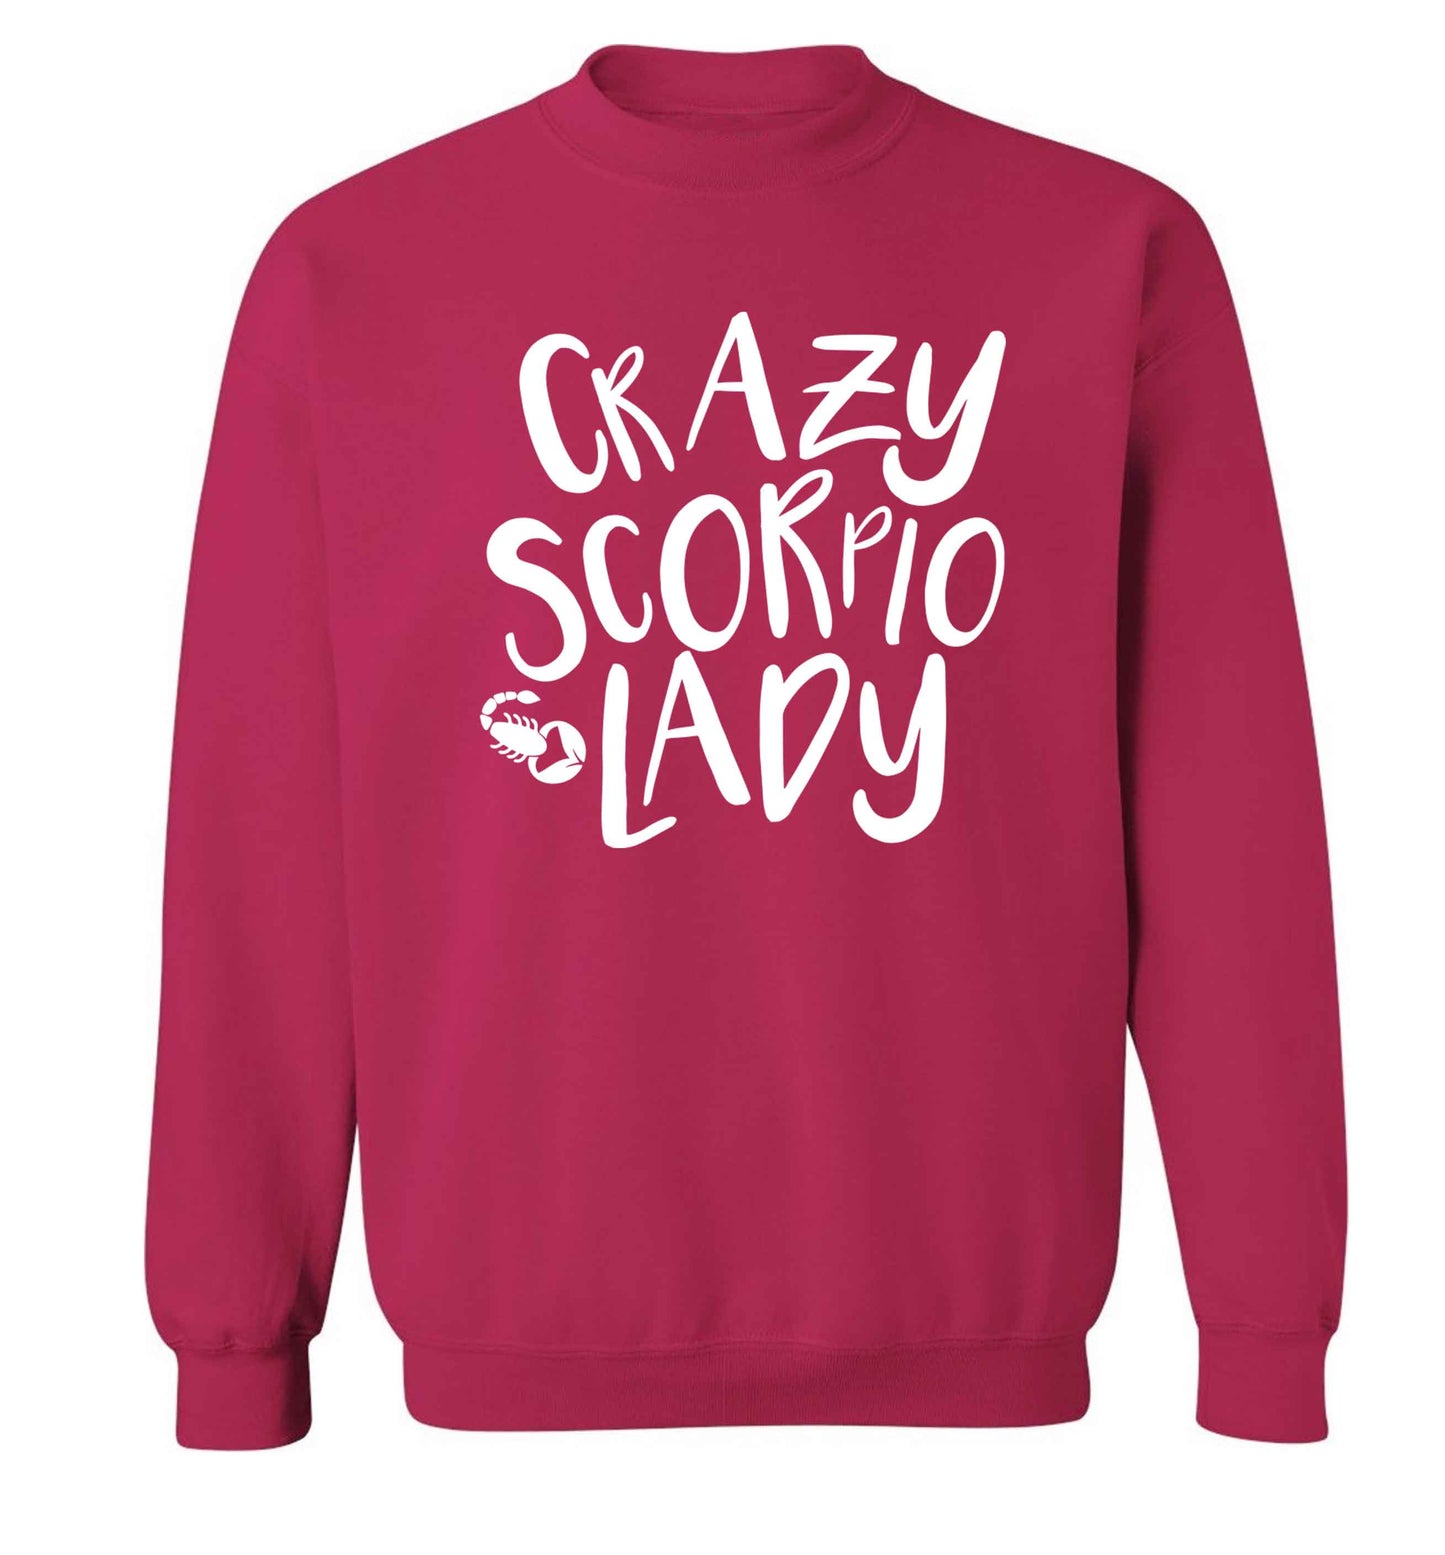 Crazy scorpio lady Adult's unisex pink Sweater 2XL